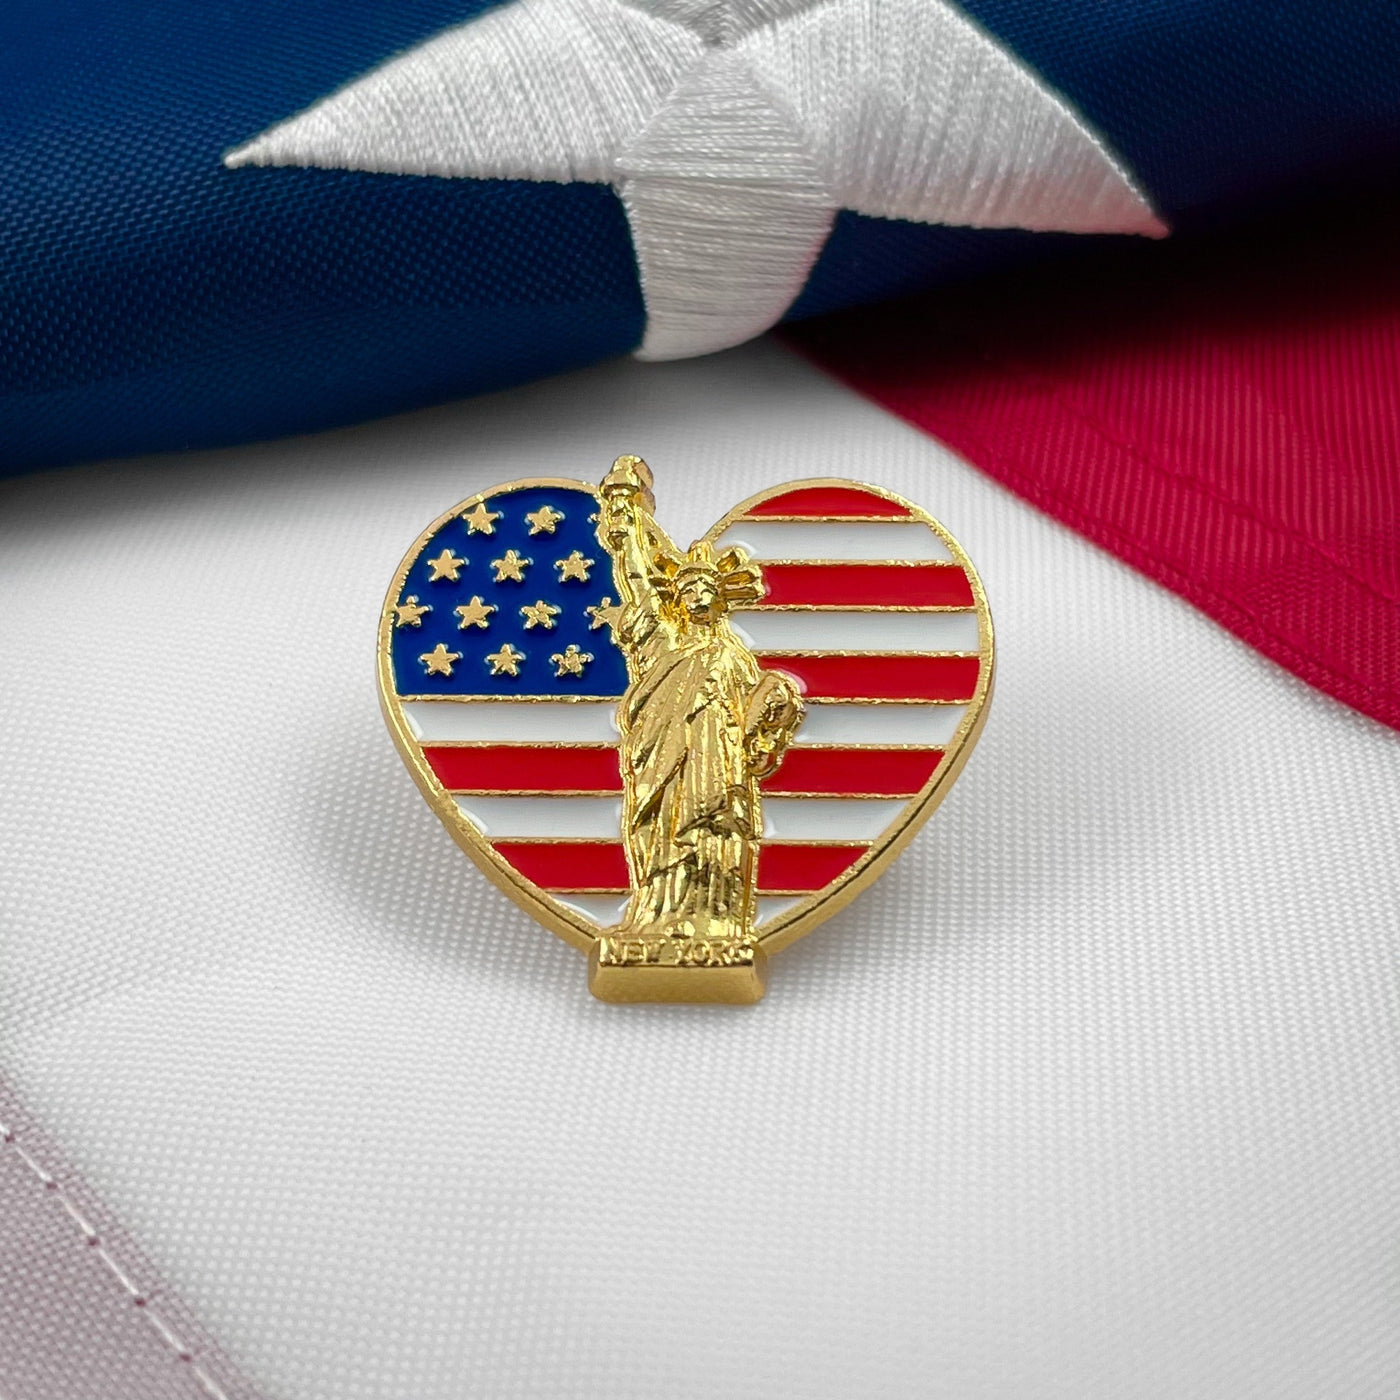 American Liberty Heart Pin